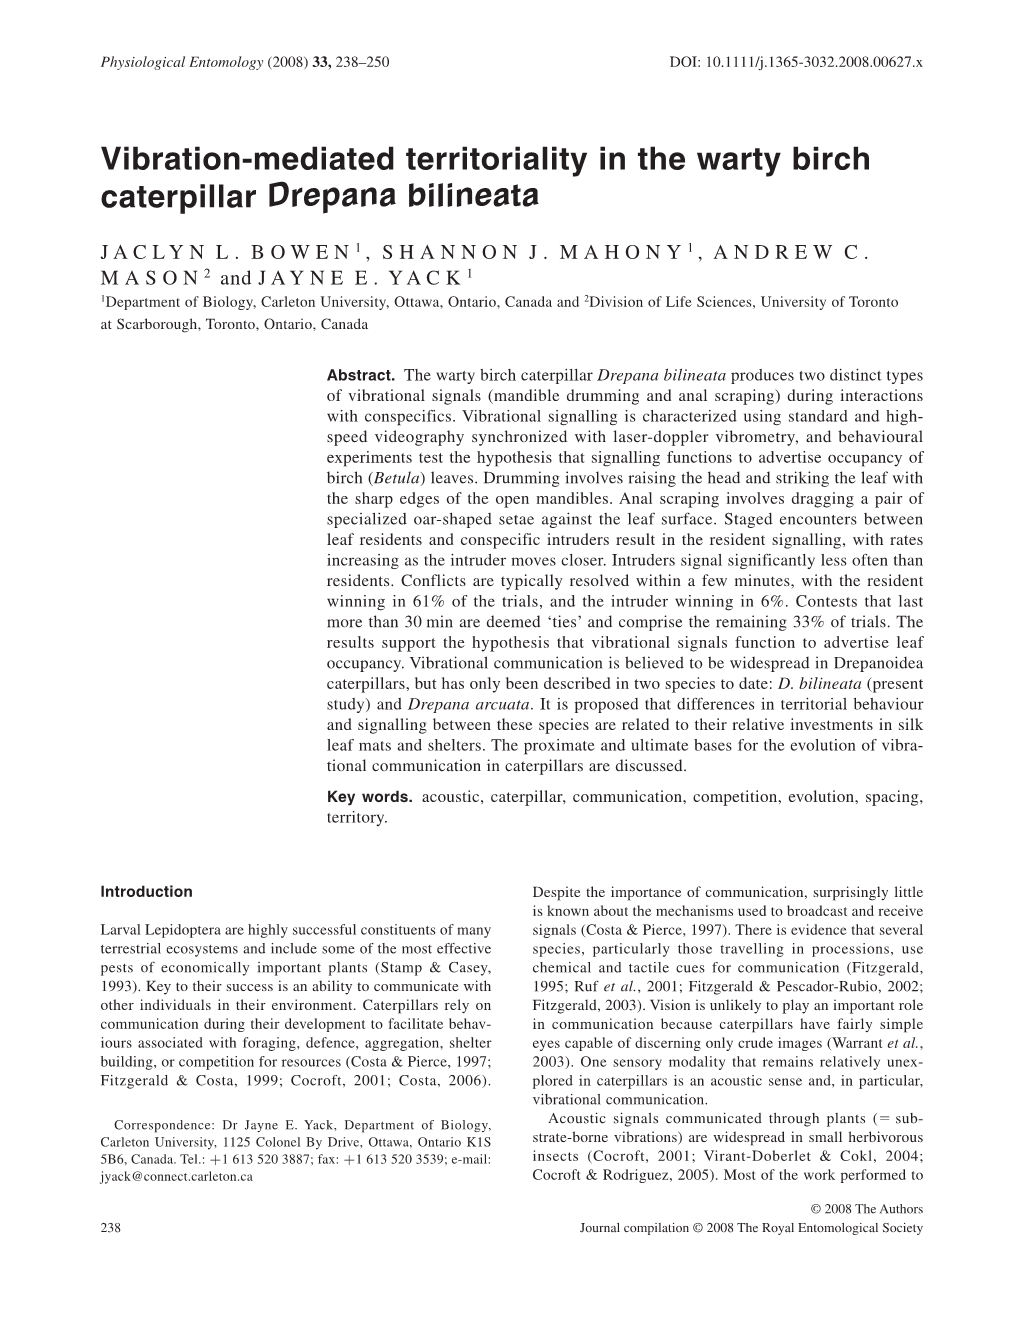 Vibration-Mediated Territoriality in the Warty Birch Caterpillar Drepana Bilineata